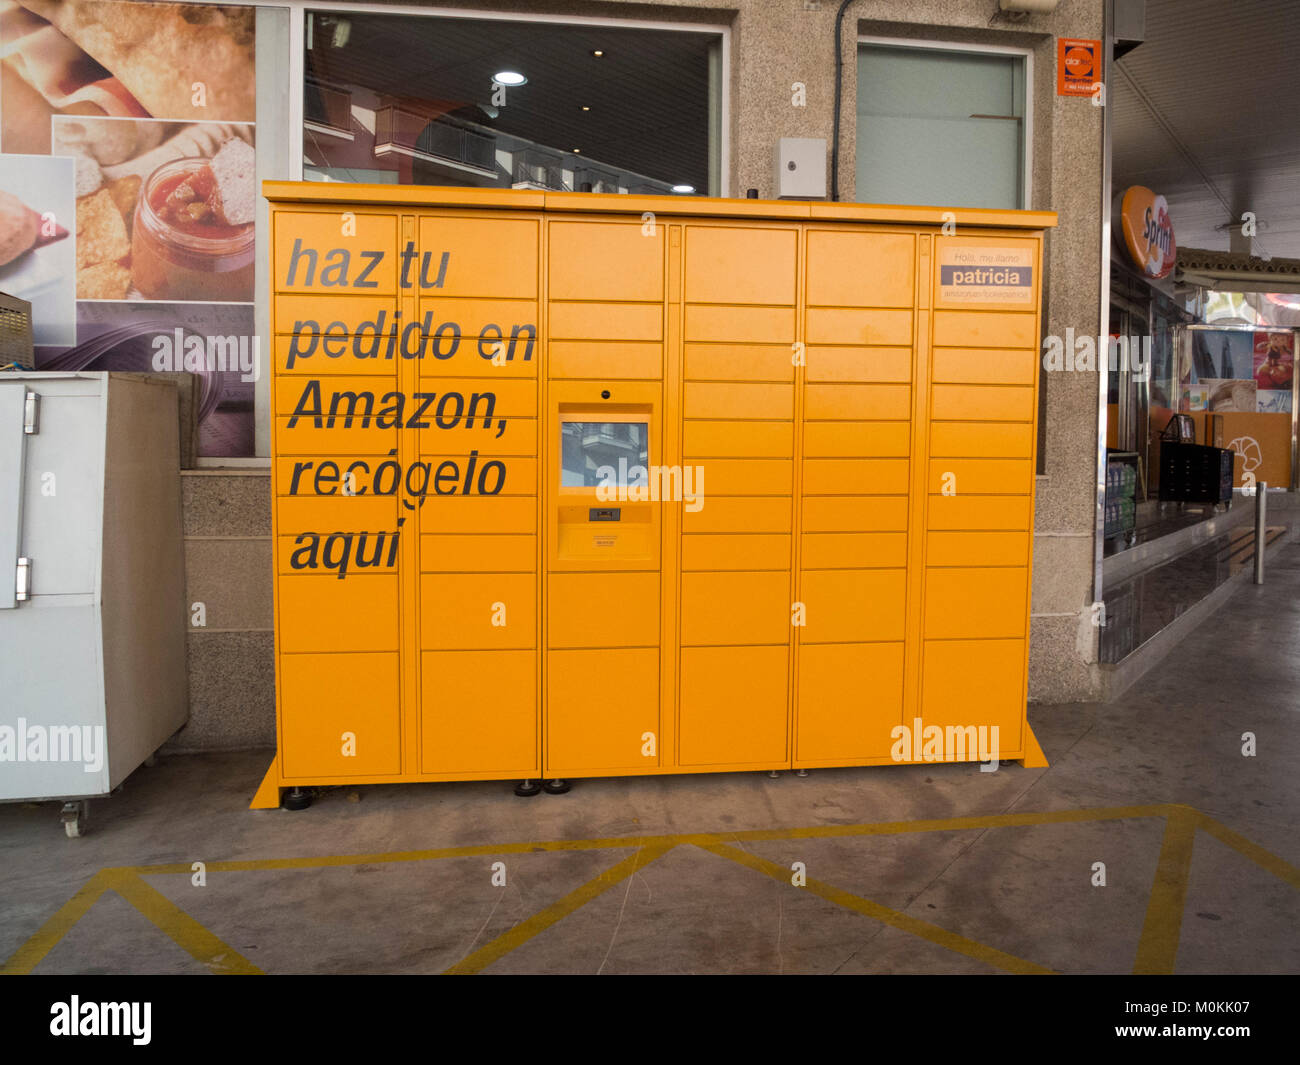 Amazon Locker in gas station in Altea, Alicante, Spain Stock Photo - Alamy